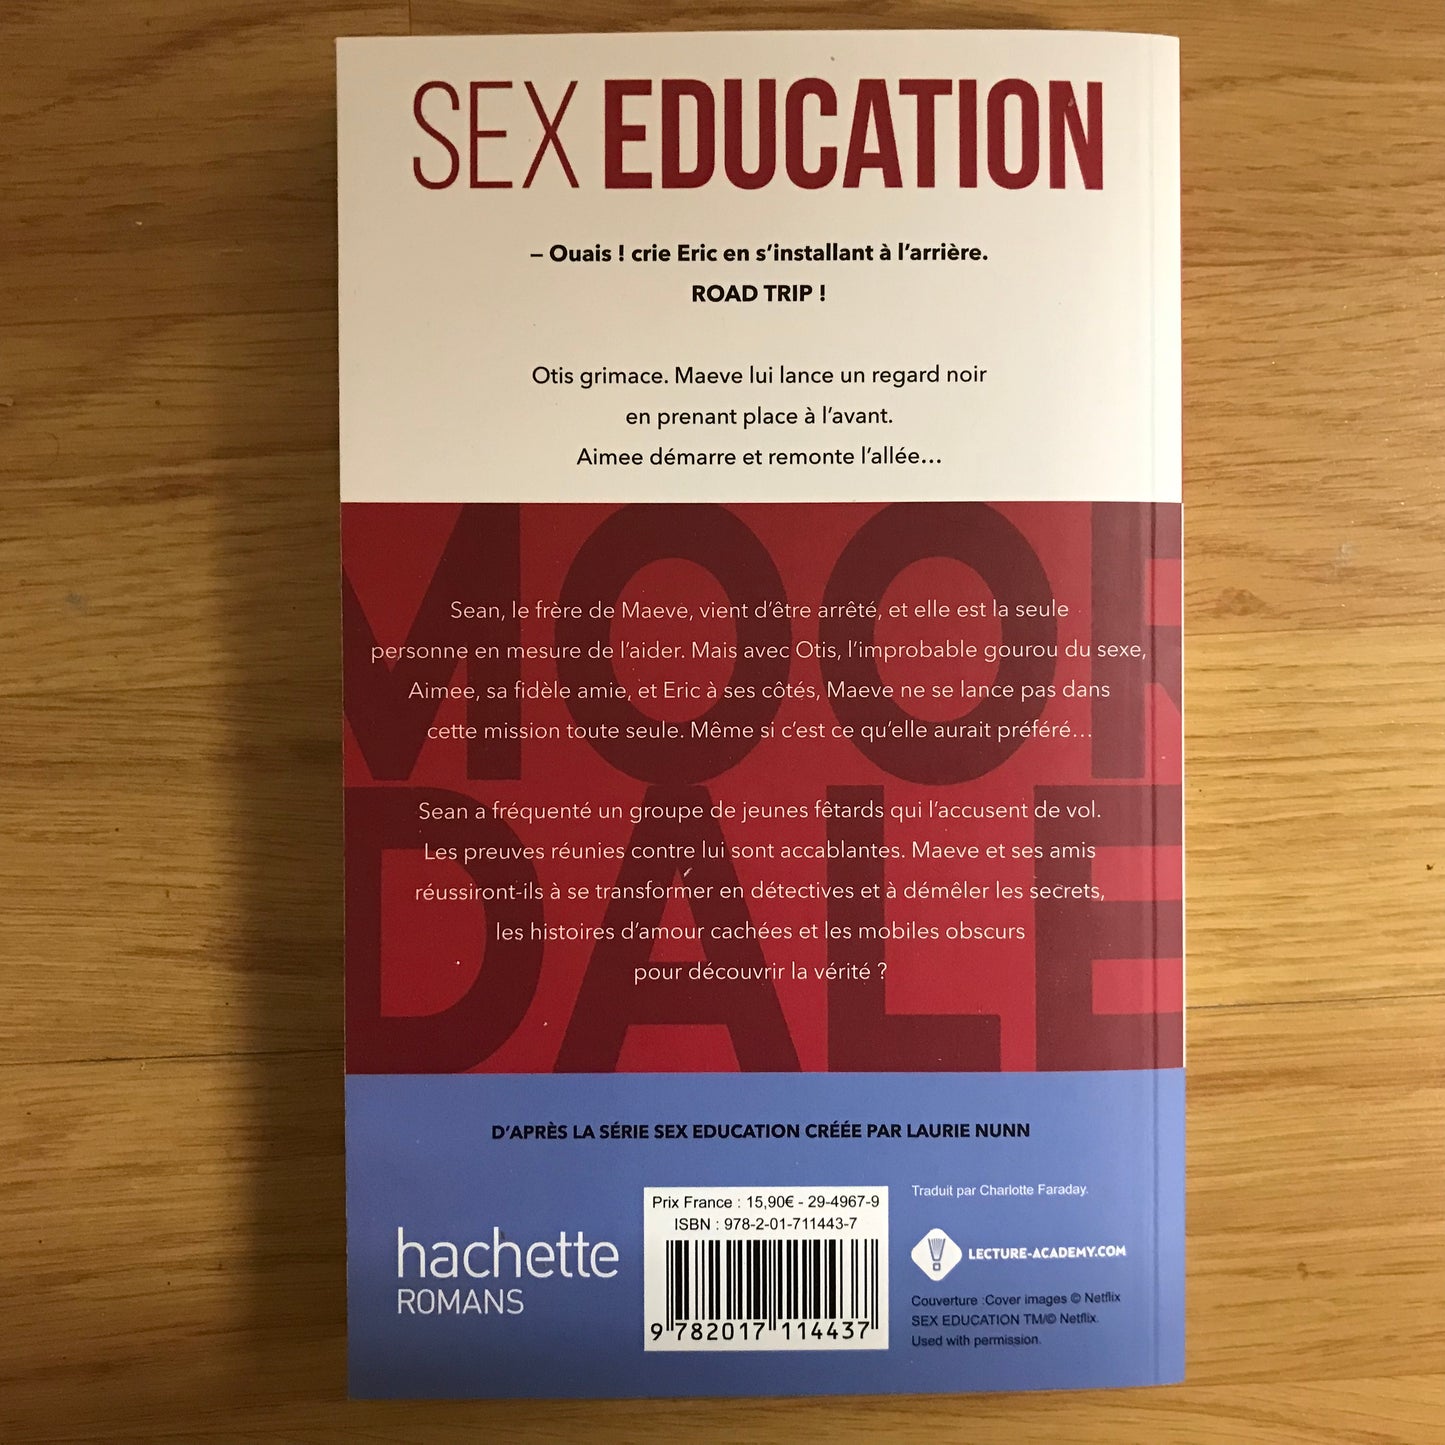 Sex education: The road trip - Katy Birchall